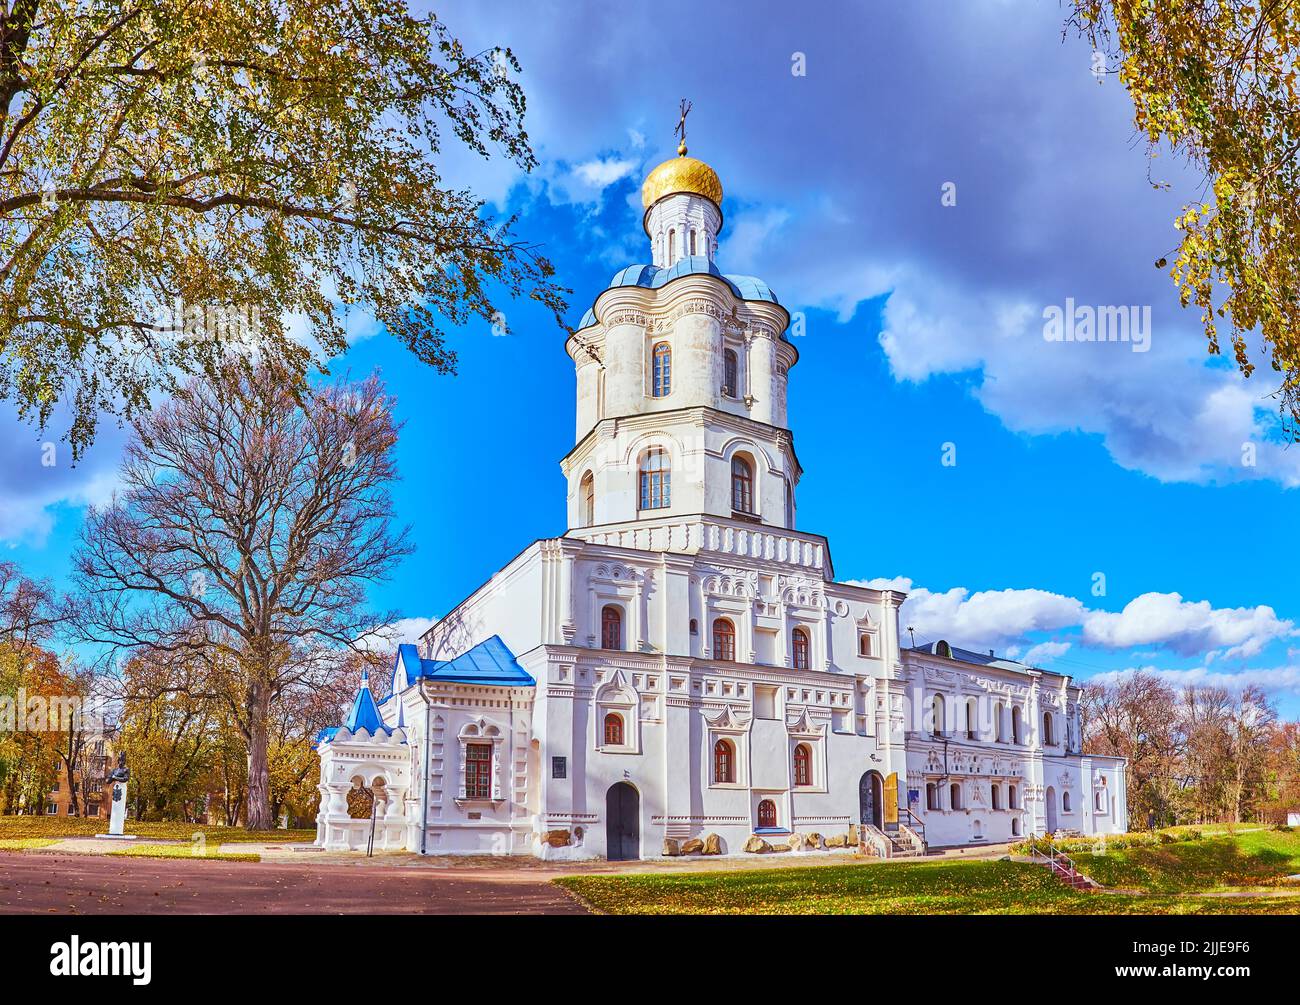 Ukrainian Baroque building of Chernihiv Collegium with carved stucco decorations and golden dome, Chernihiv, Ukraine Stock Photo